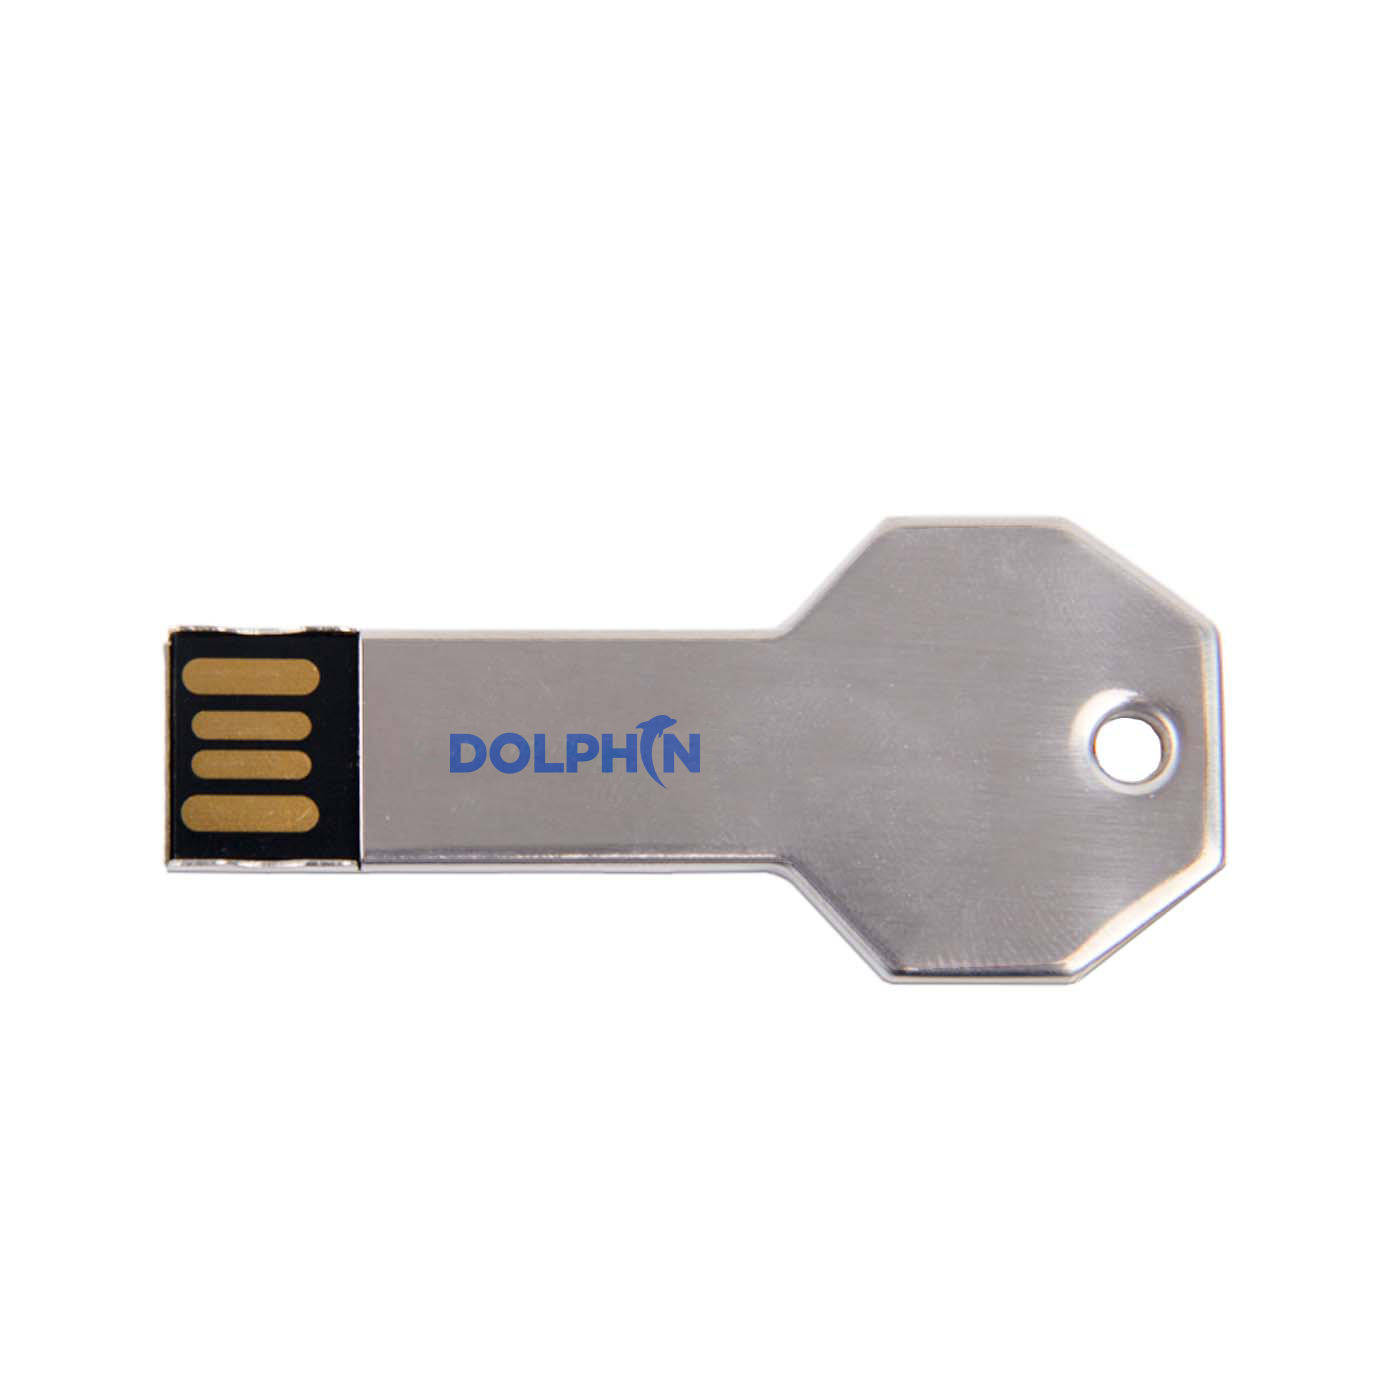 2GB Metal Key Shaped USB Memory Stick